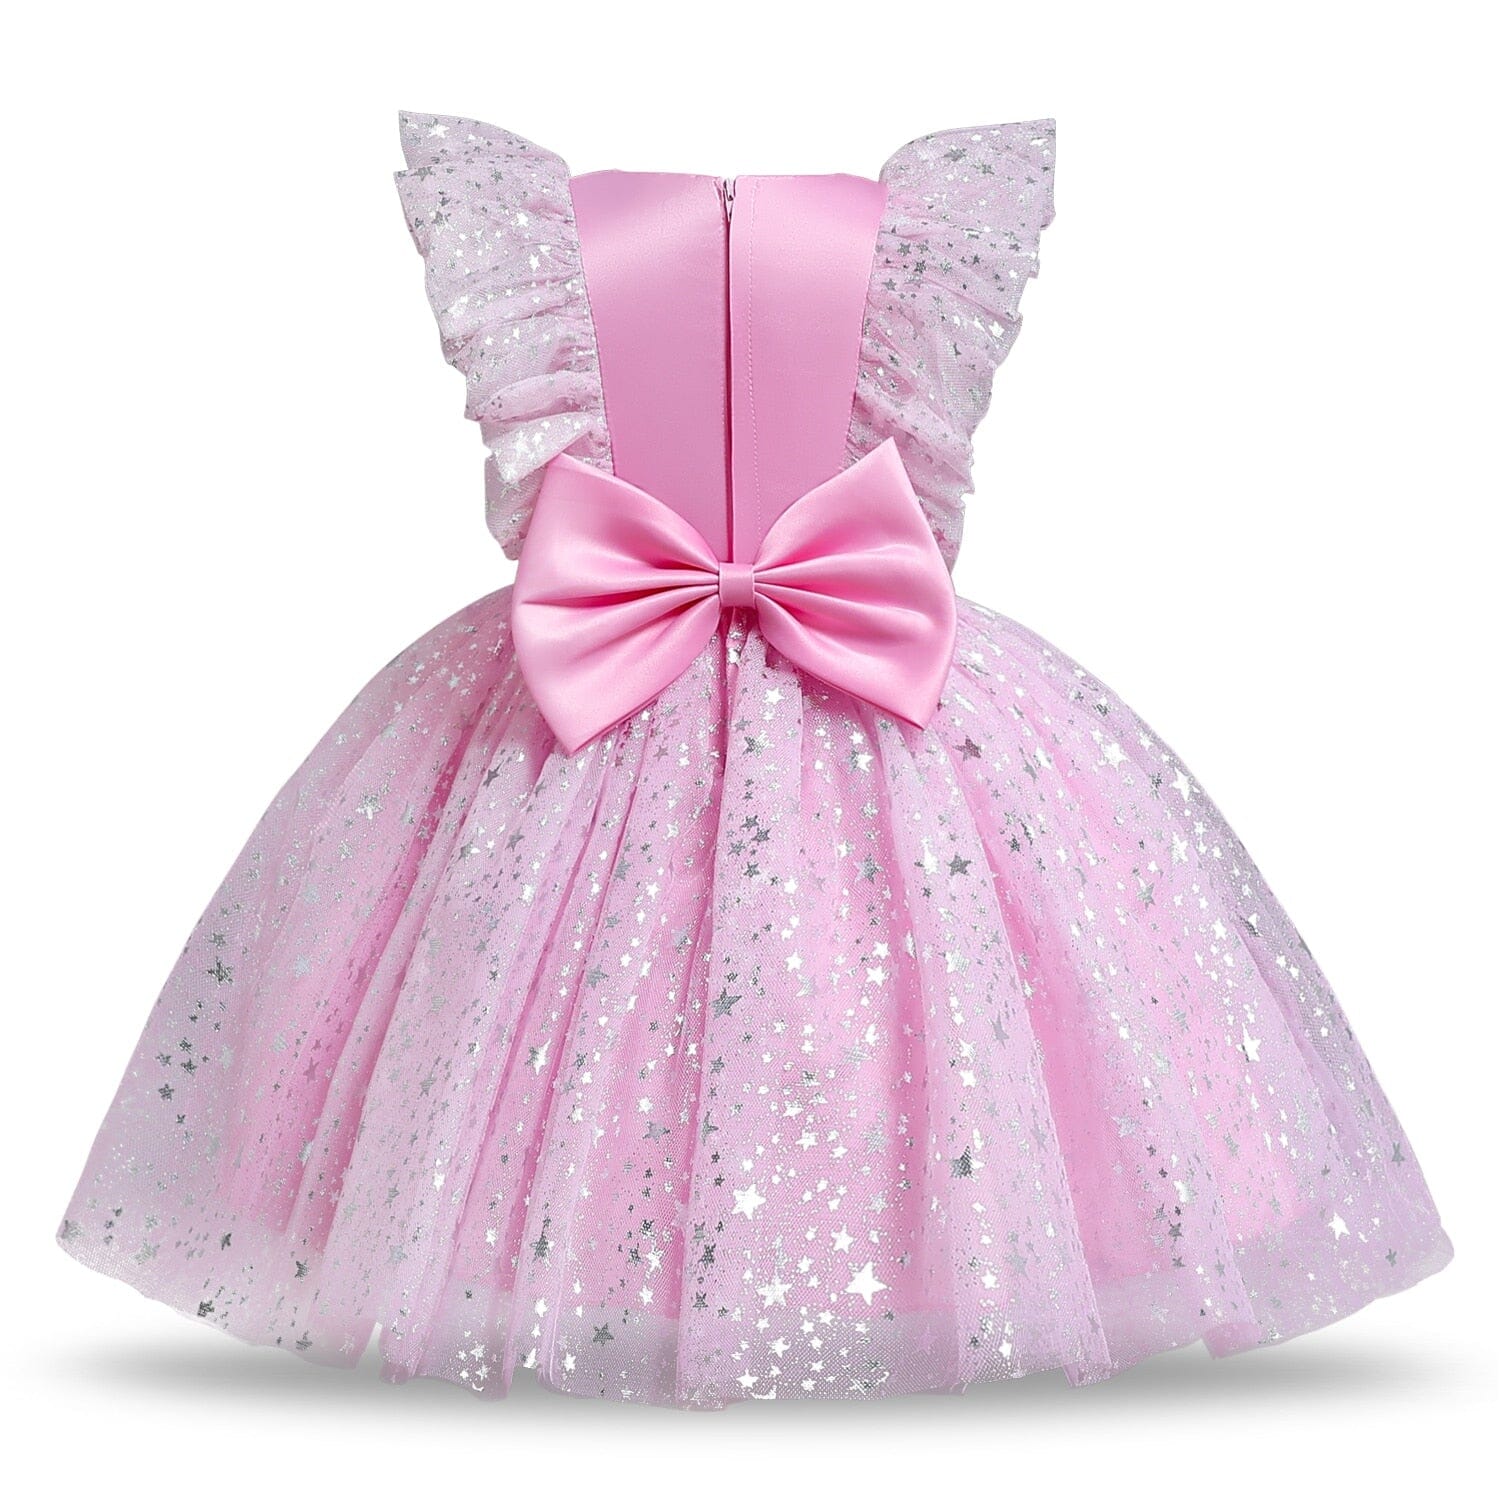 Big Bow Dress for Girls Baby & Toddler Dresses Fashionjosie LightPink 3M 